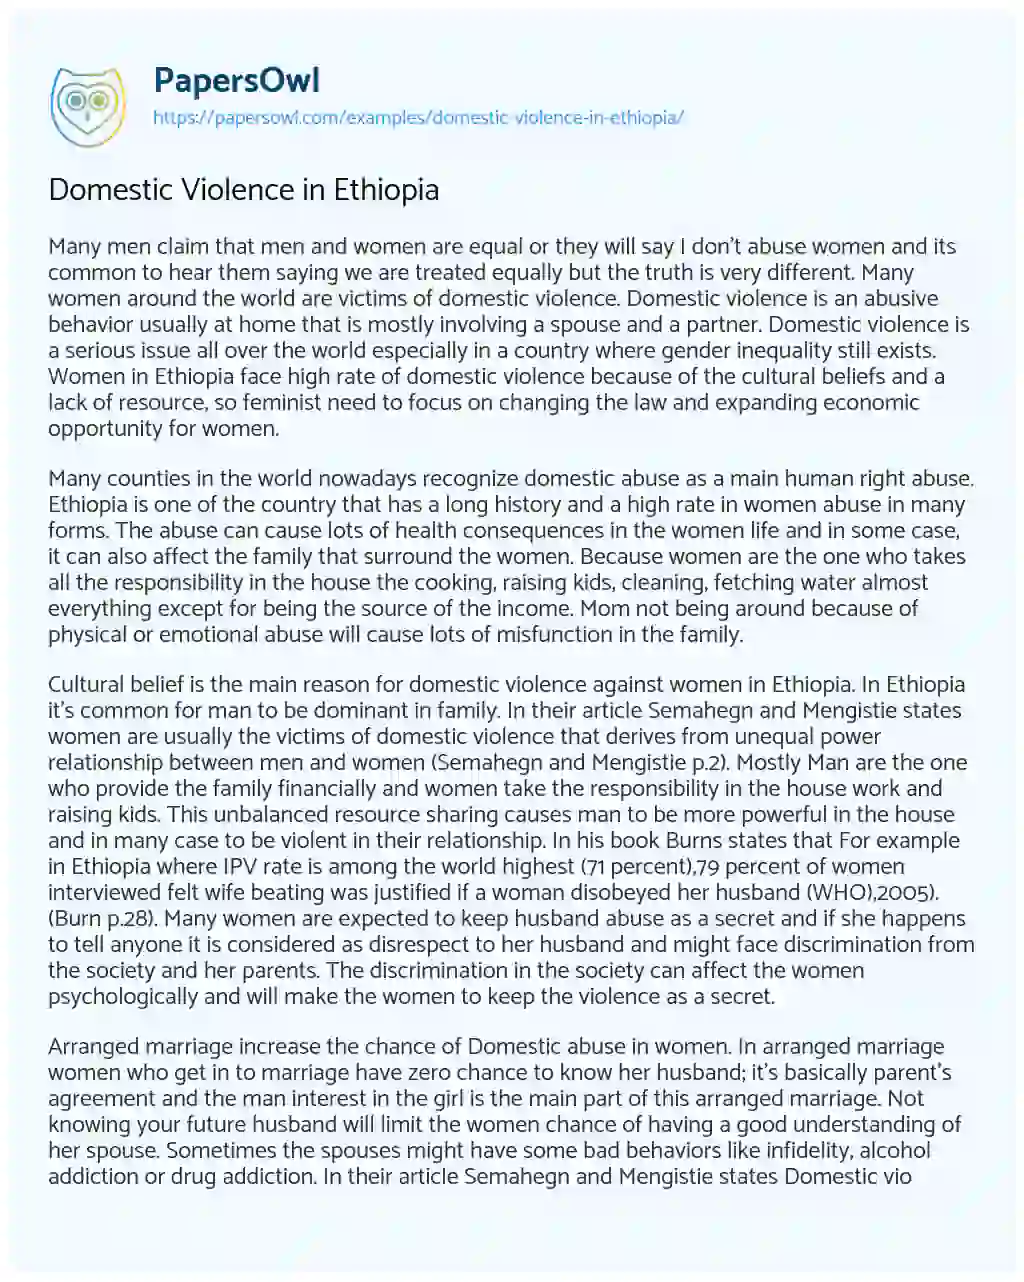 Essay on Domestic Violence in Ethiopia